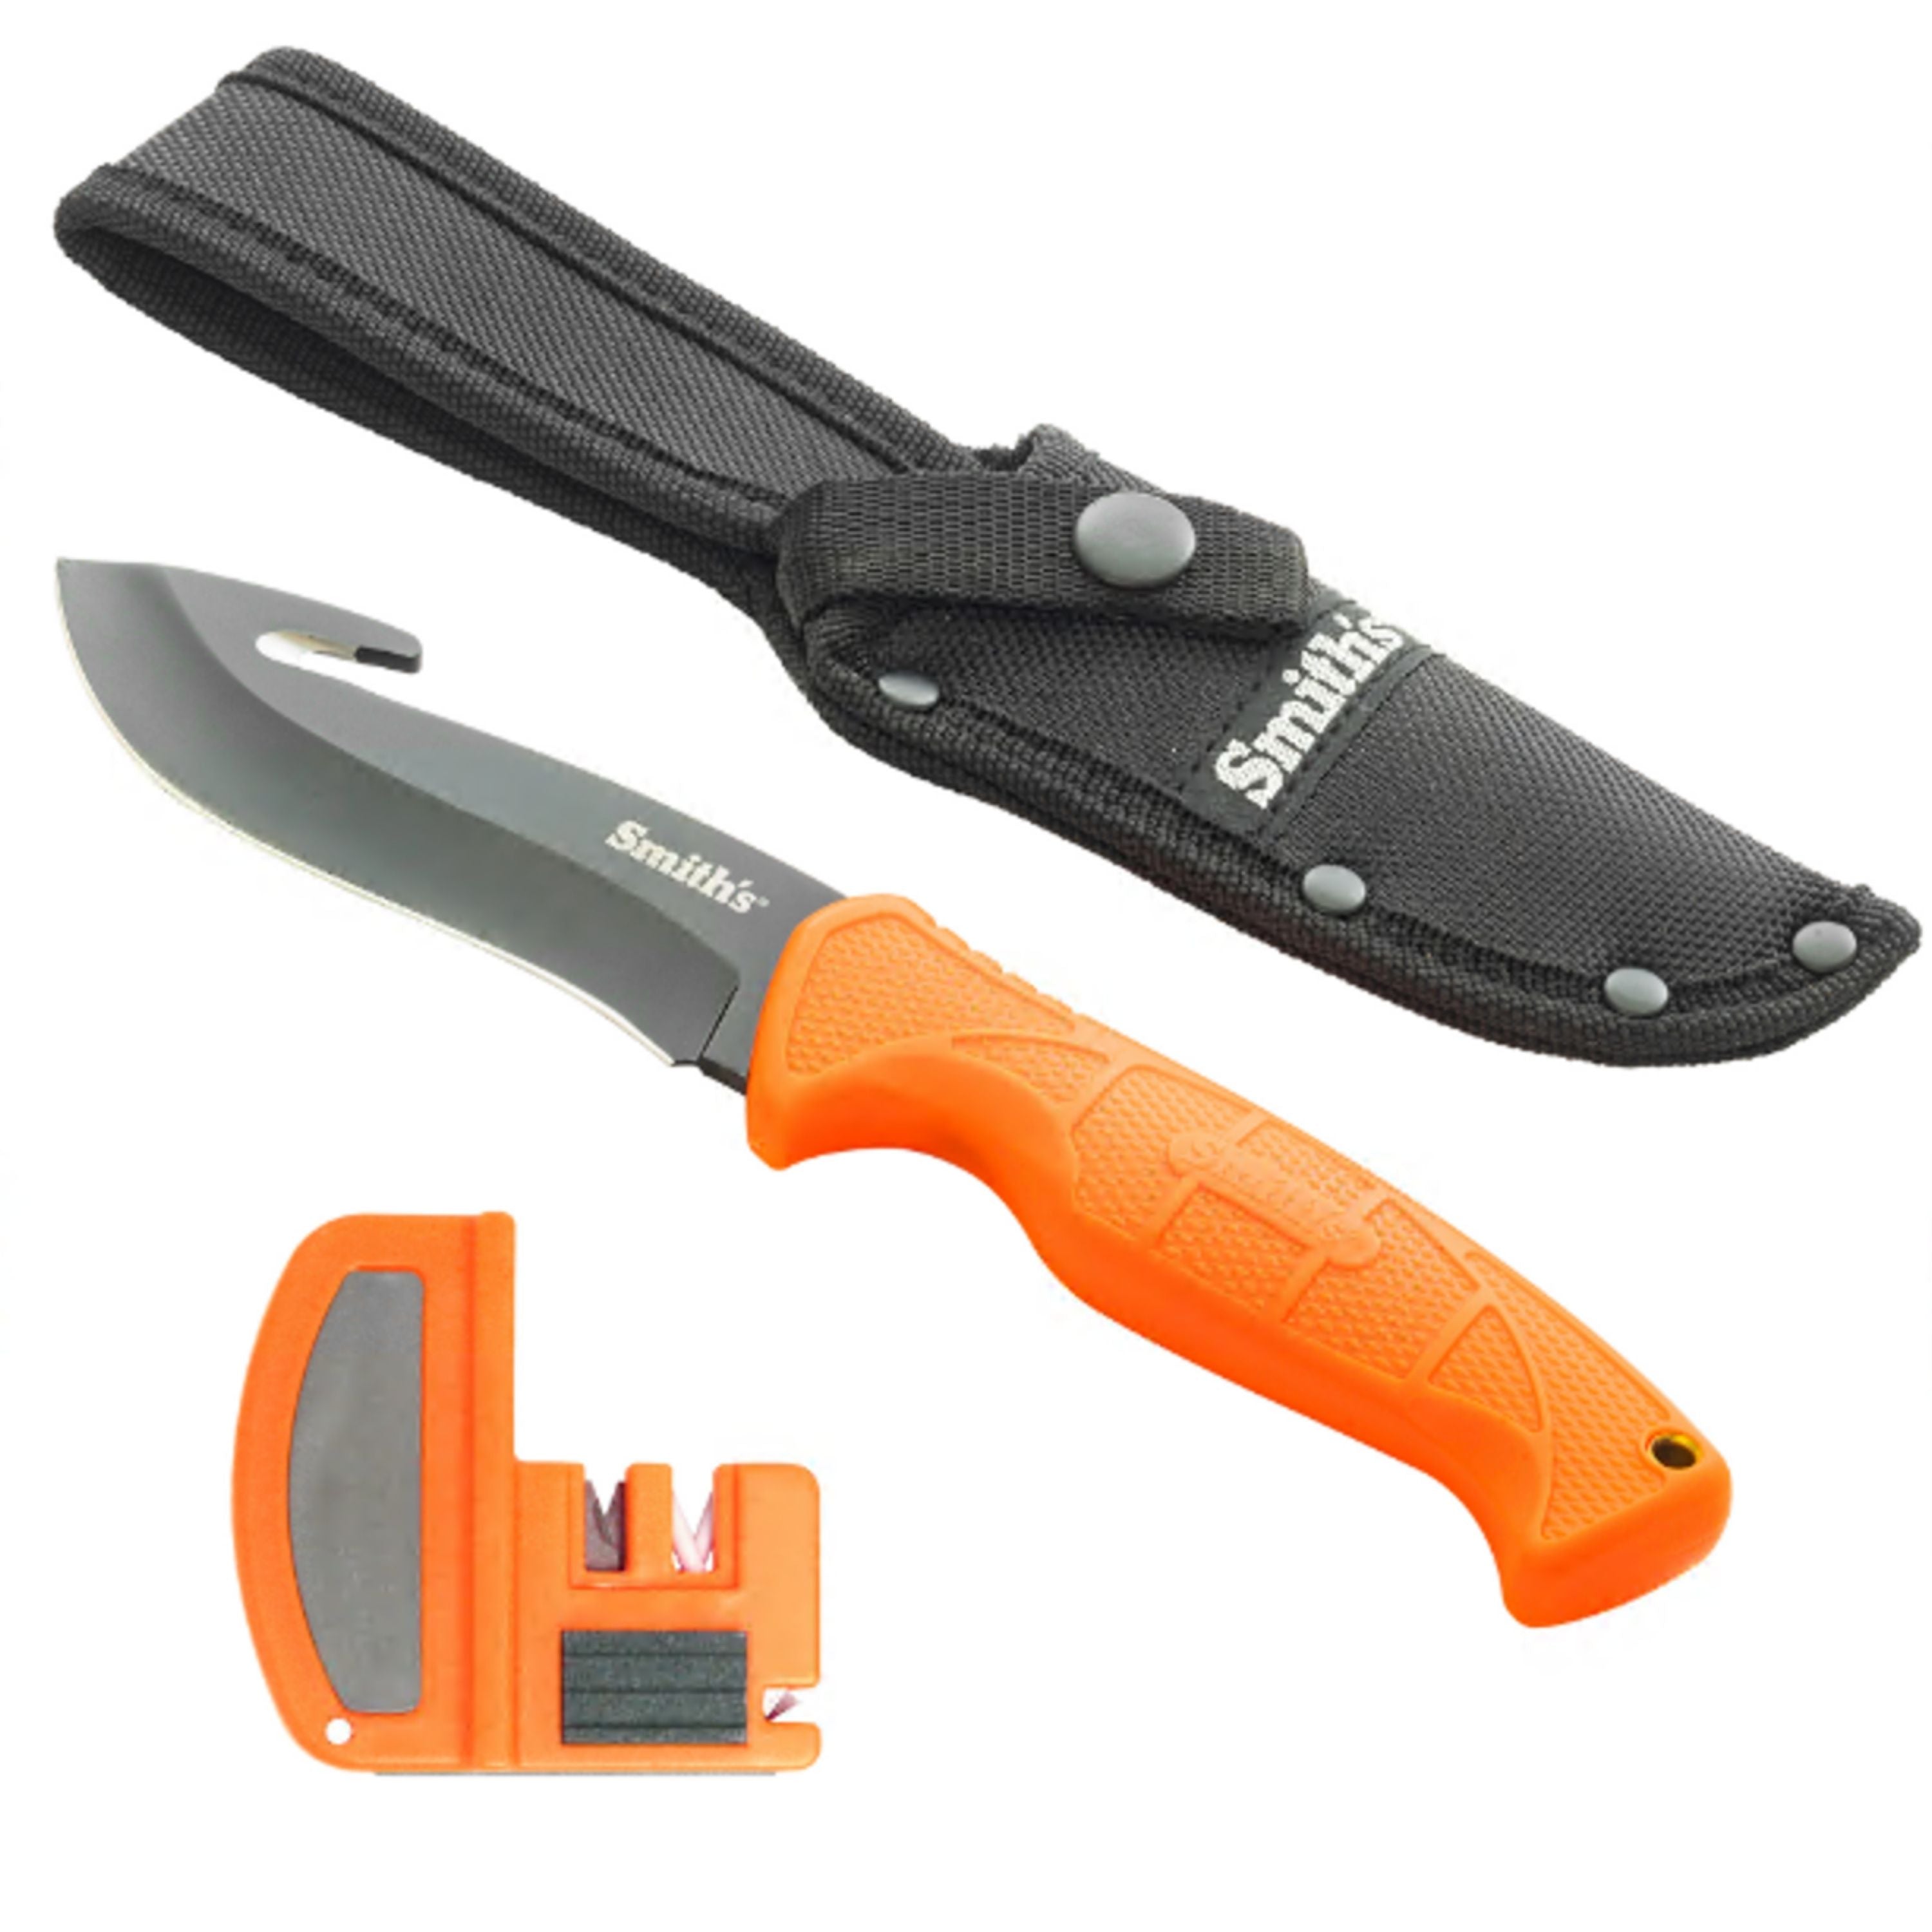 Edgesport fixed blade gut hook knive and sharpener combo